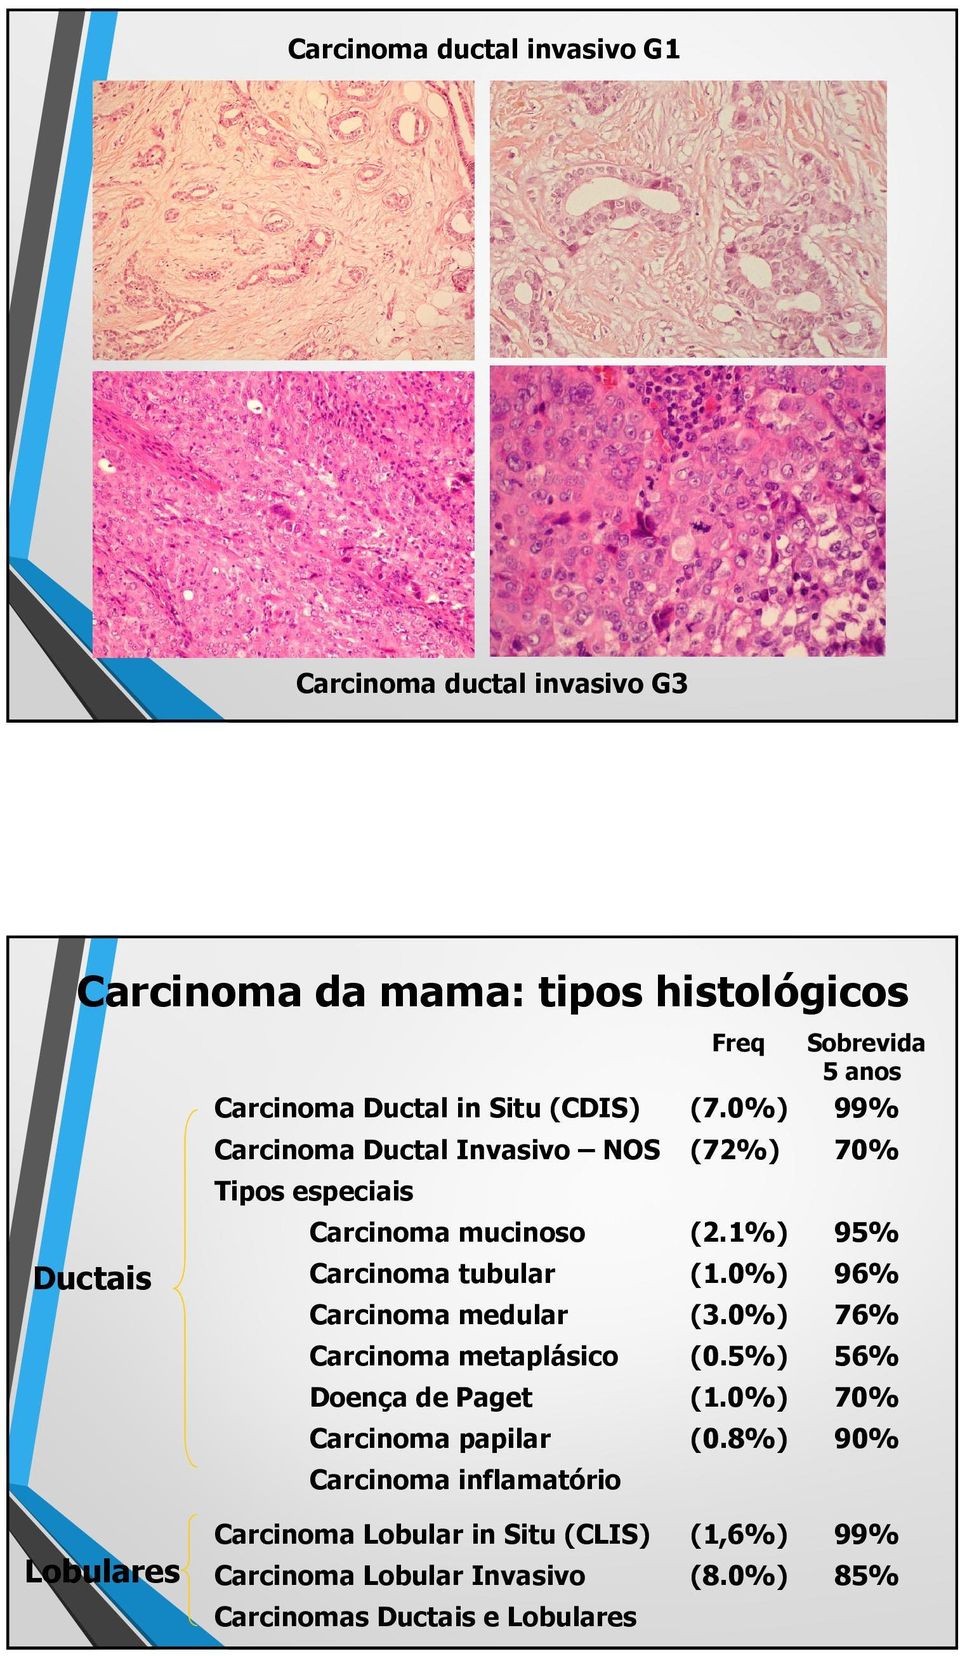 0%) 96% Carcinoma medular (3.0%) 76% Carcinoma metaplásico (0.5%) 56% Doença de Paget (1.0%) 70% Carcinoma papilar (0.